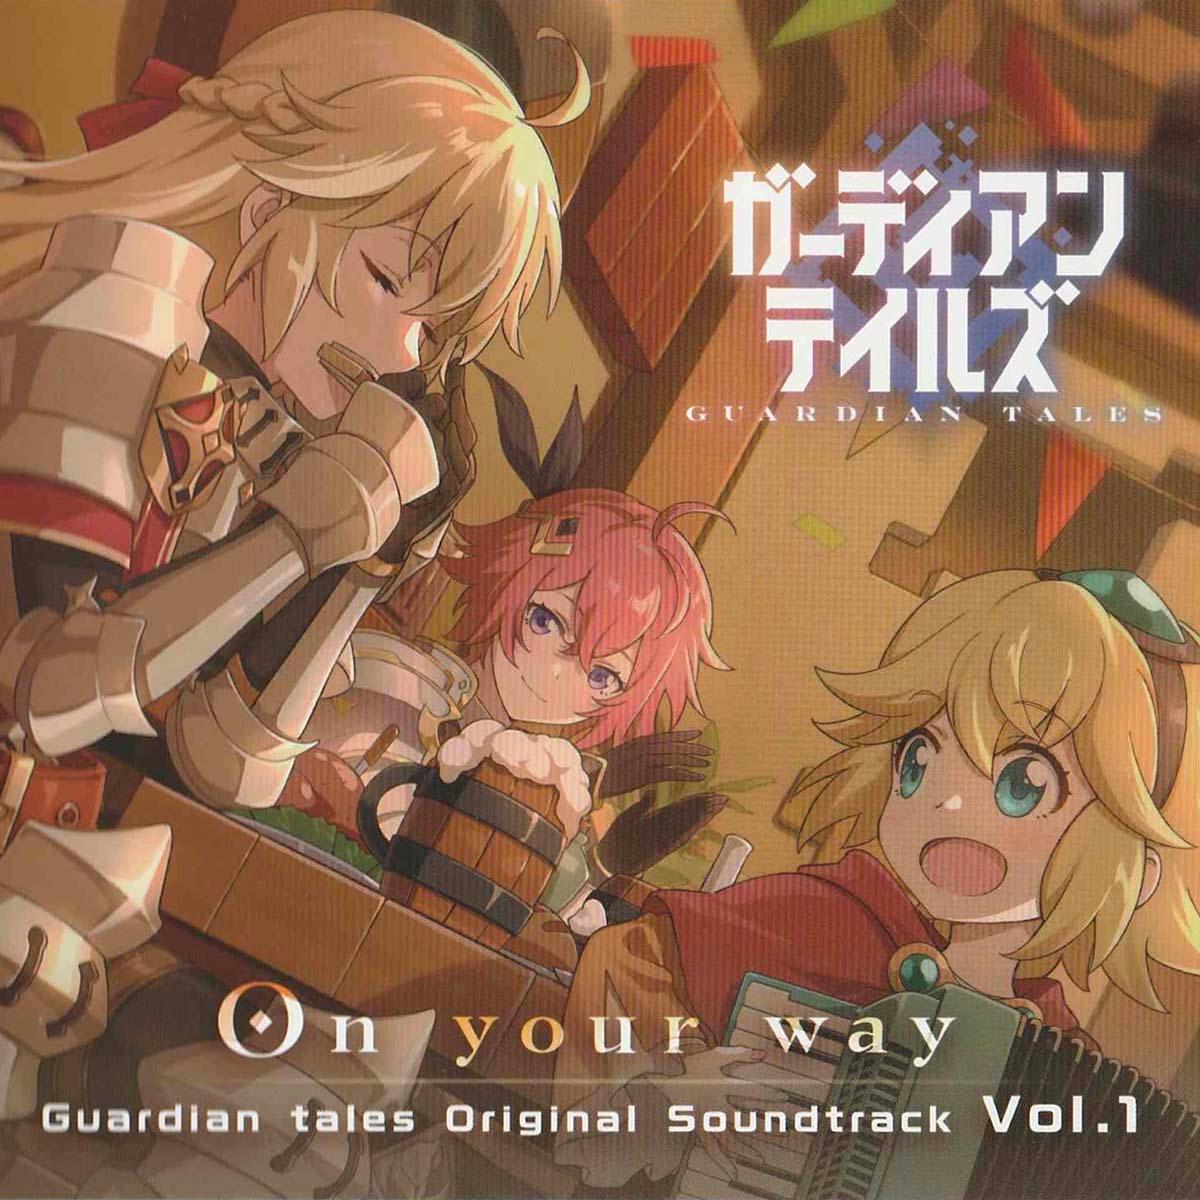 Guardian Tales Original Soundtrack Vol. 1 - On your way